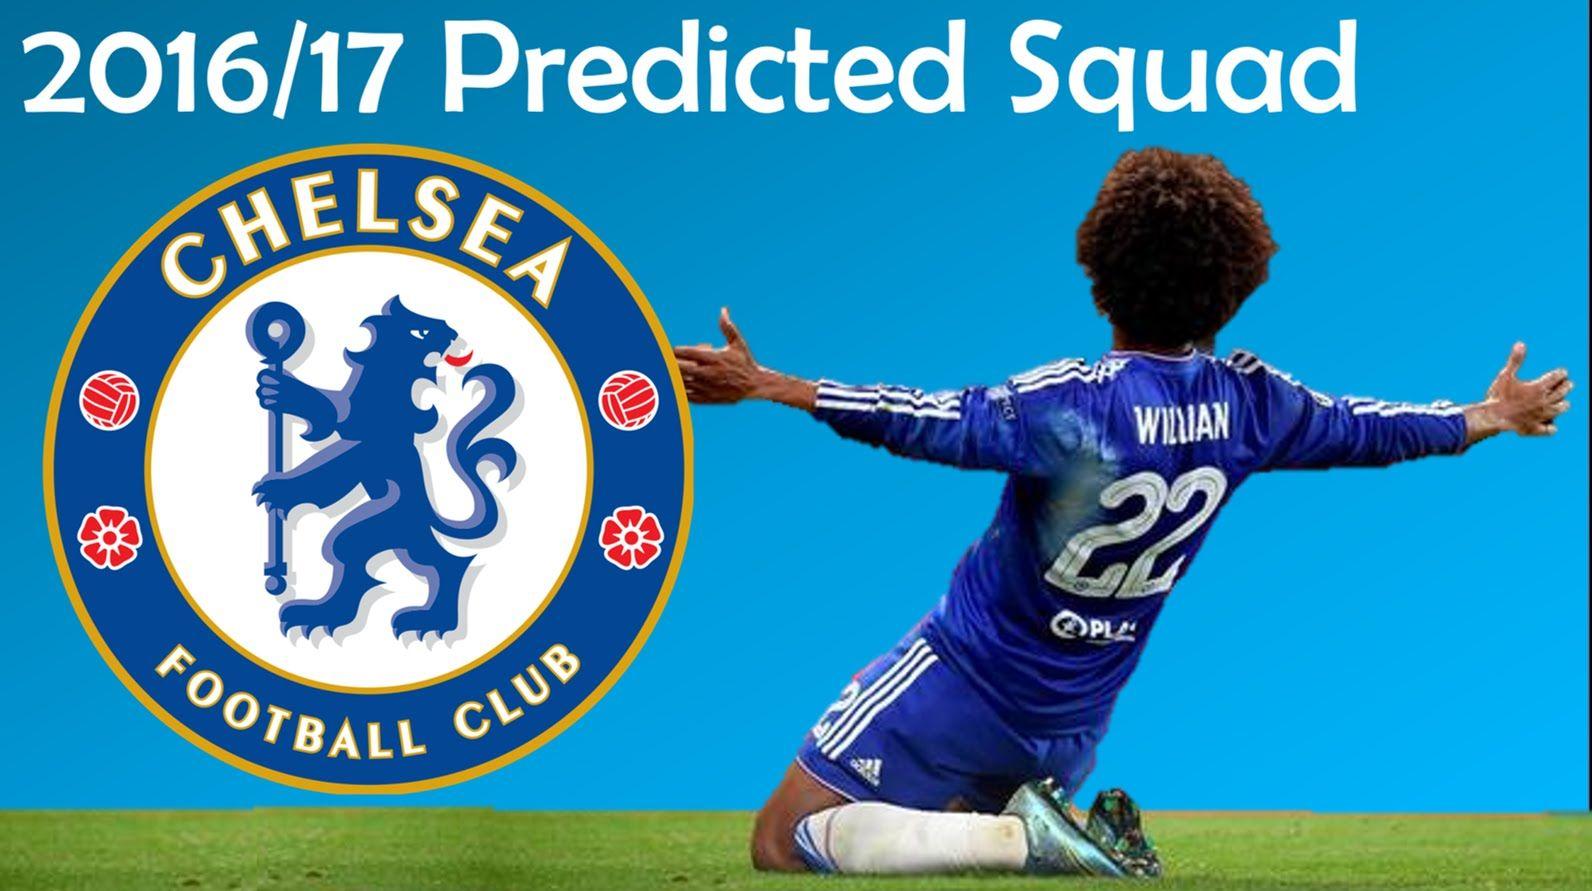 Chelsea 2016 17 Predicted Squad